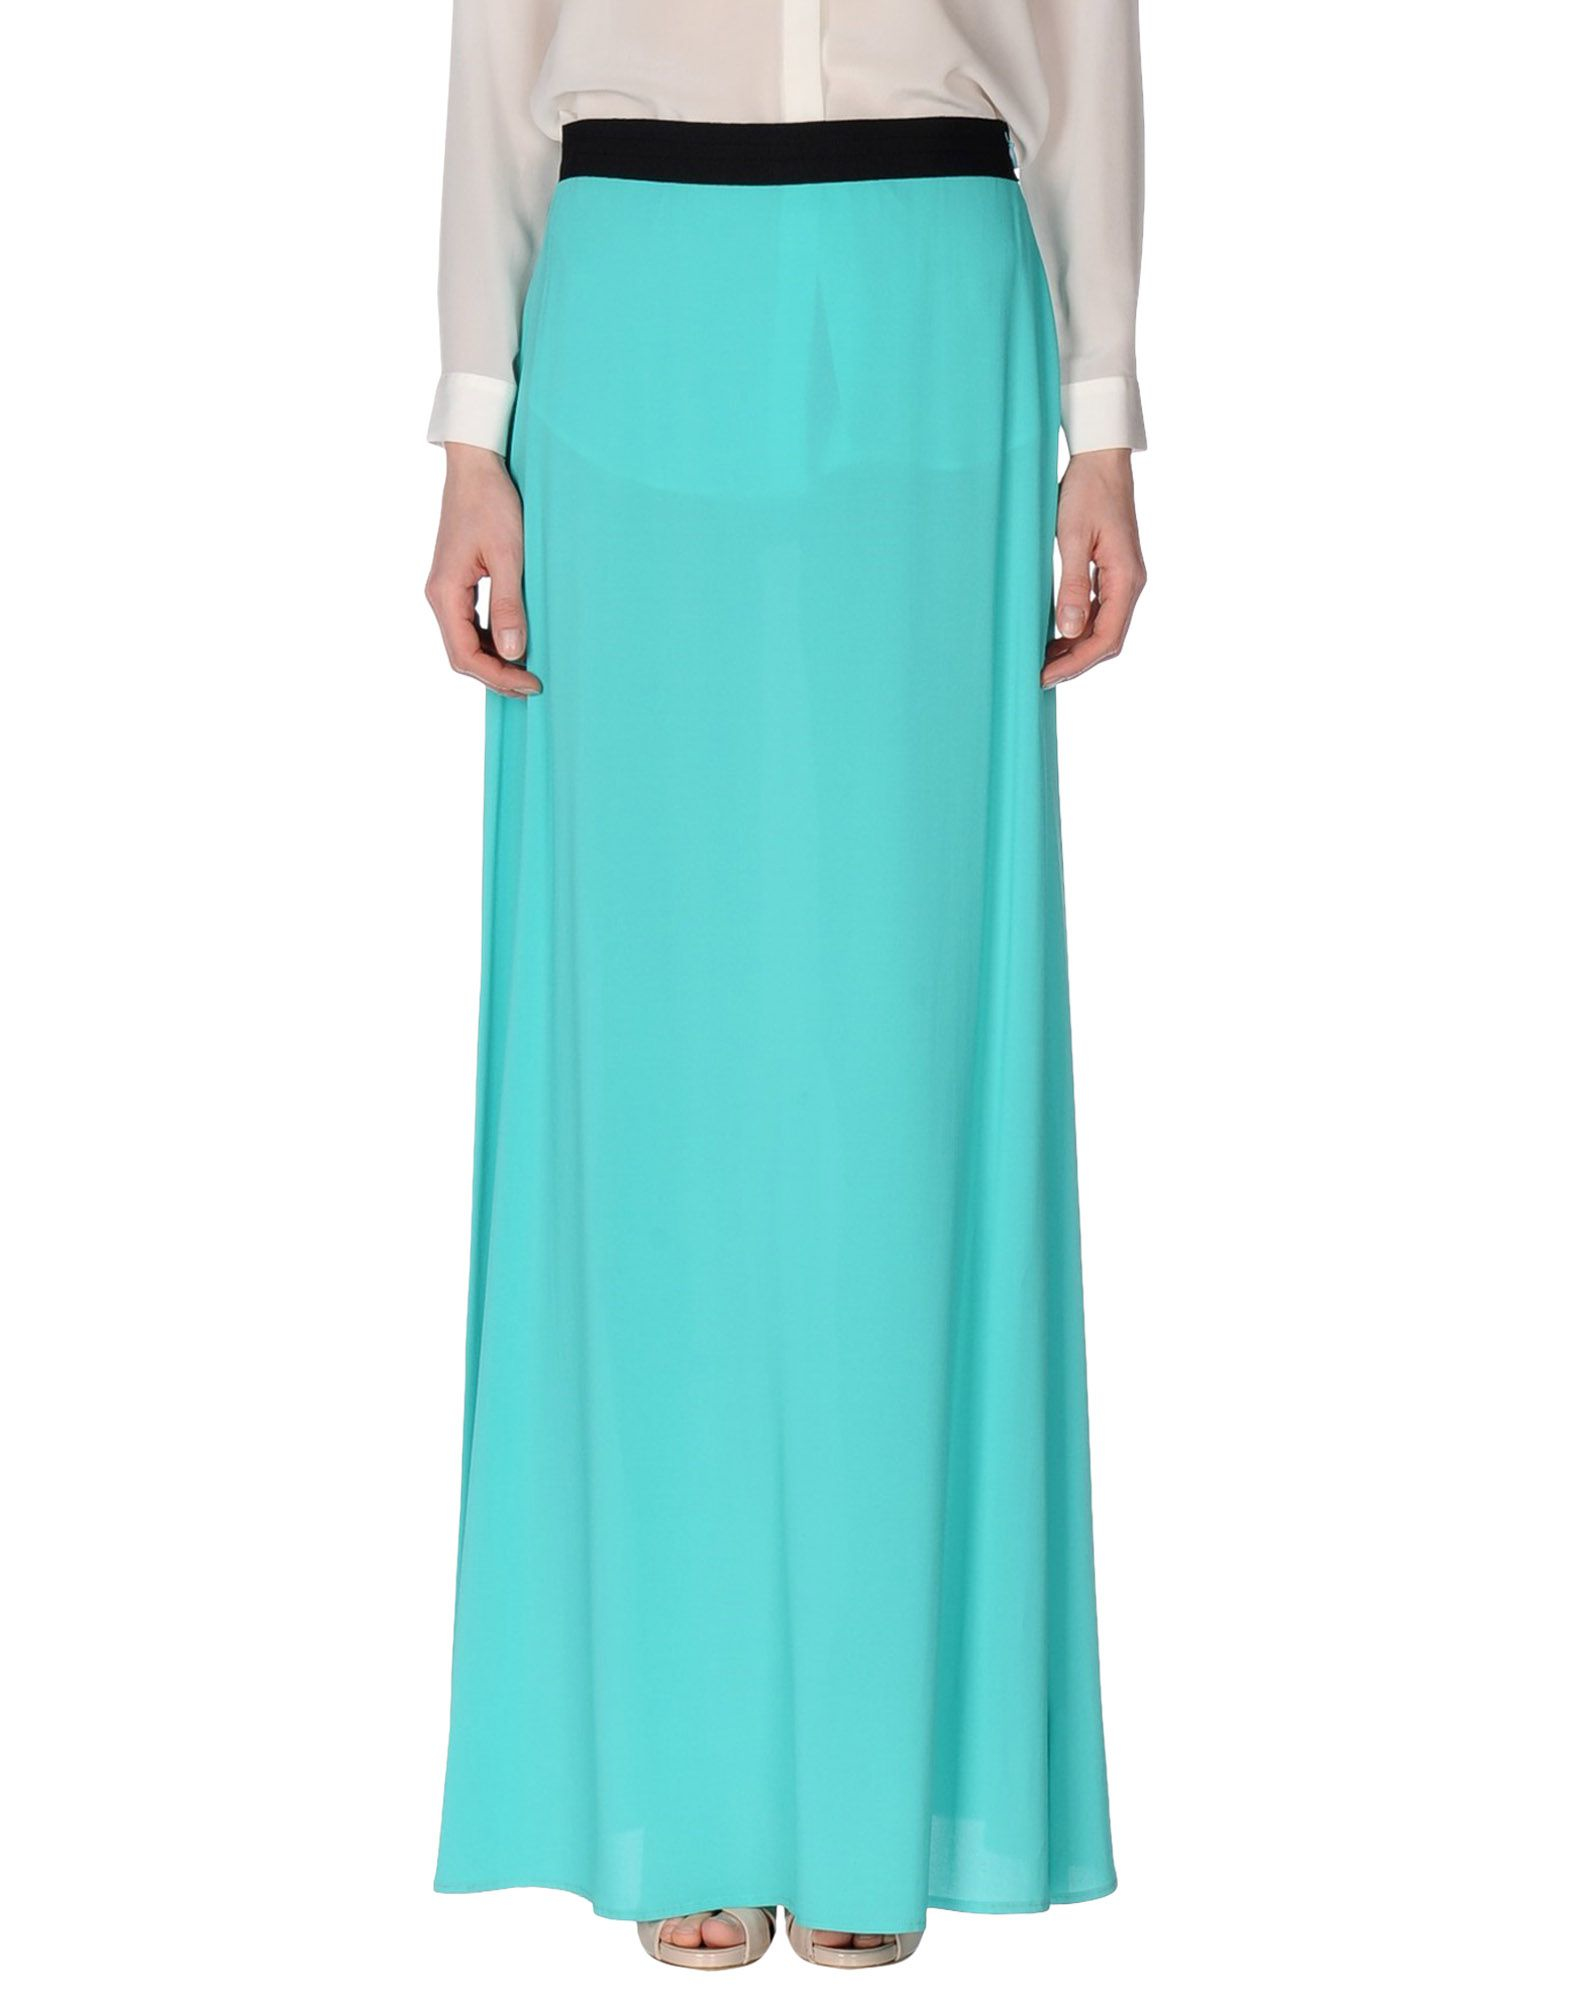 Skirt Turquoise 100